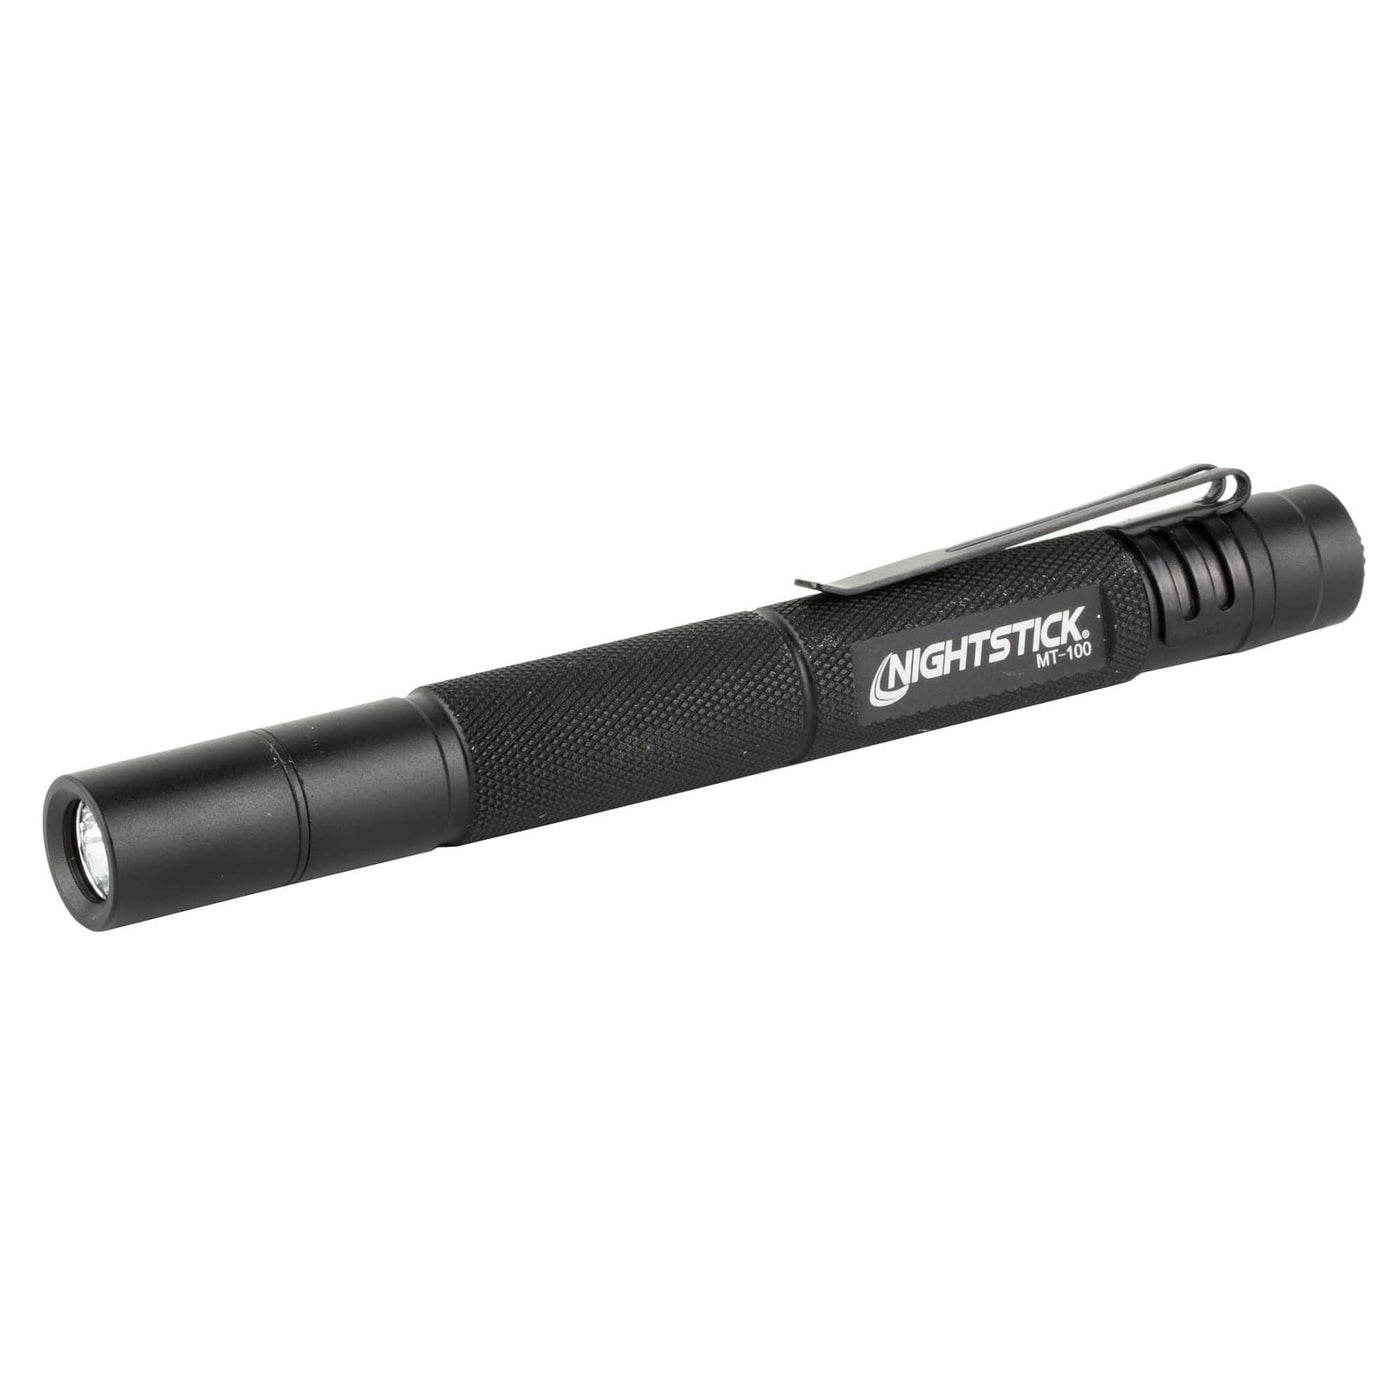 Nightstick Nightstick Mini-tac Flashlight Black 100 Lumens 100 lumen General Hunting Accessories